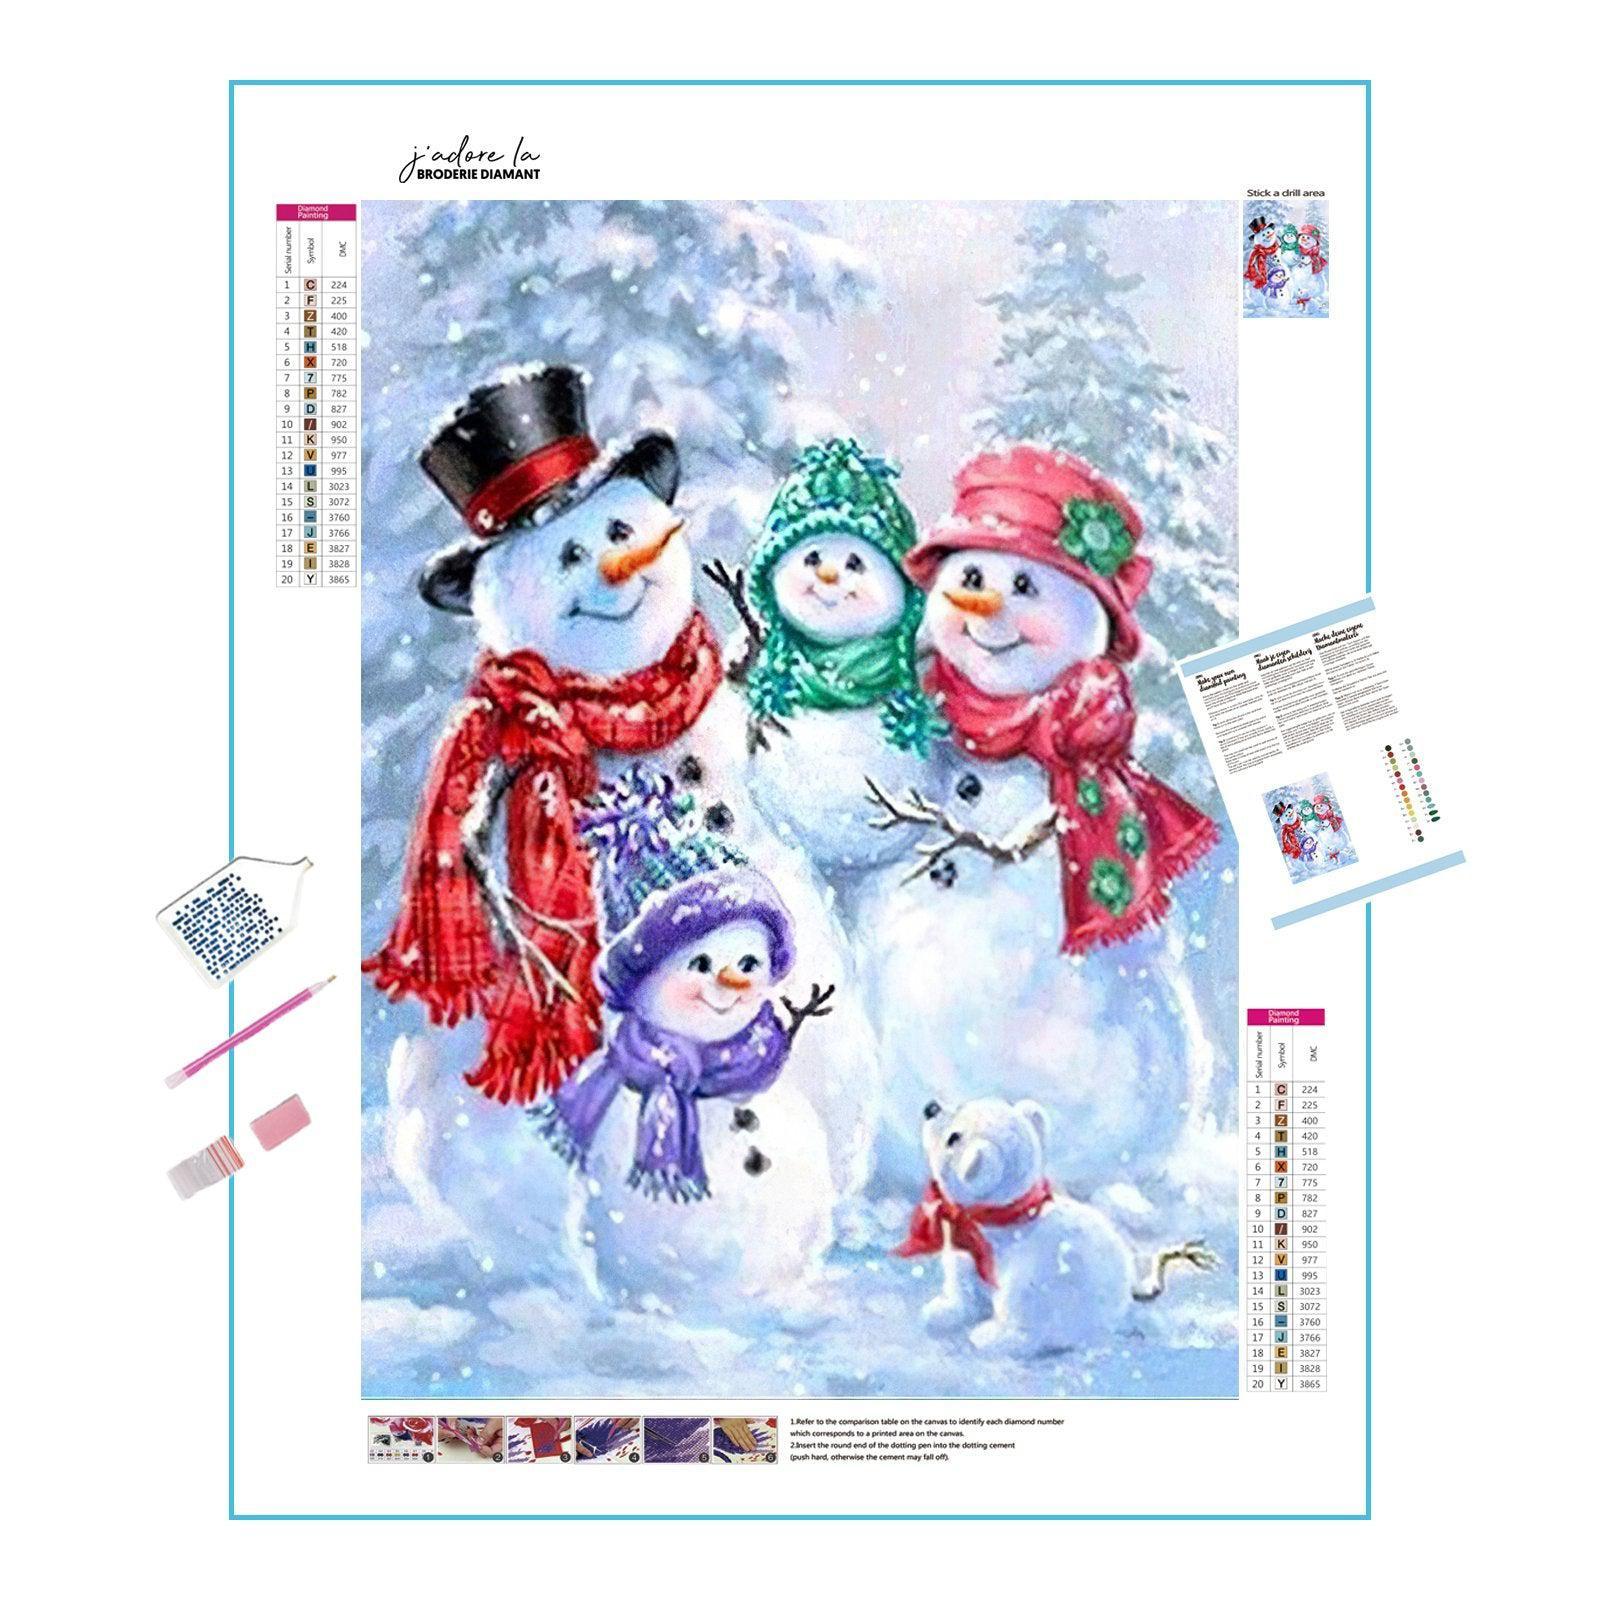 Celebrate winter with a cheerful snowman family scene.Family Of Snowman - Diamondartlove